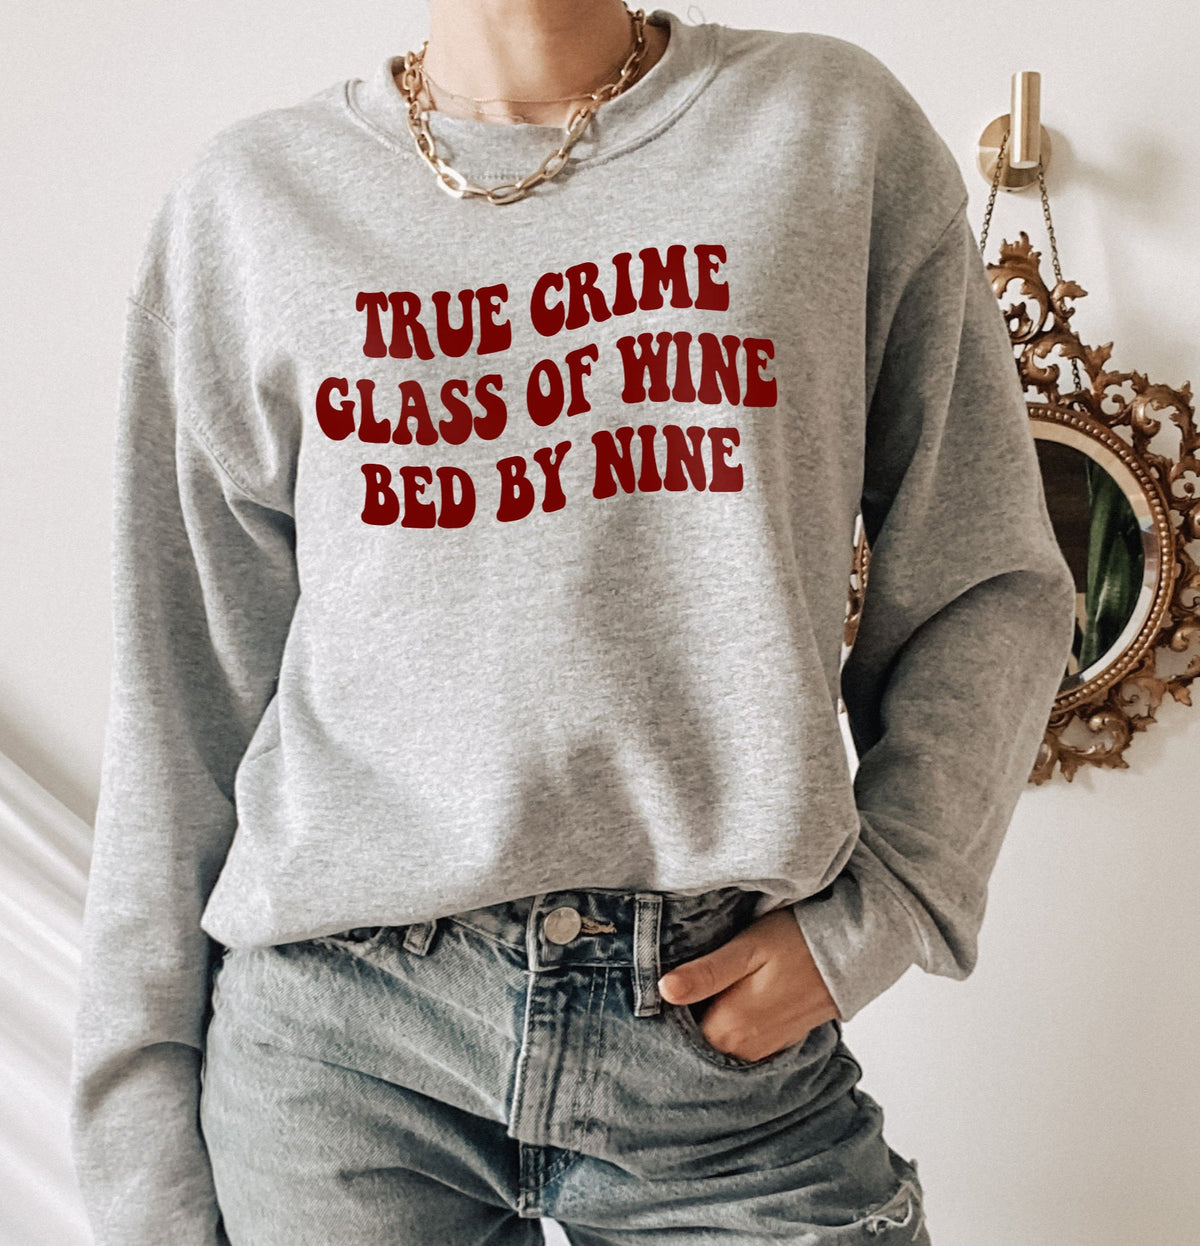 grey sweatshirt that says true crime glass of wine bed by nine - HighCiti